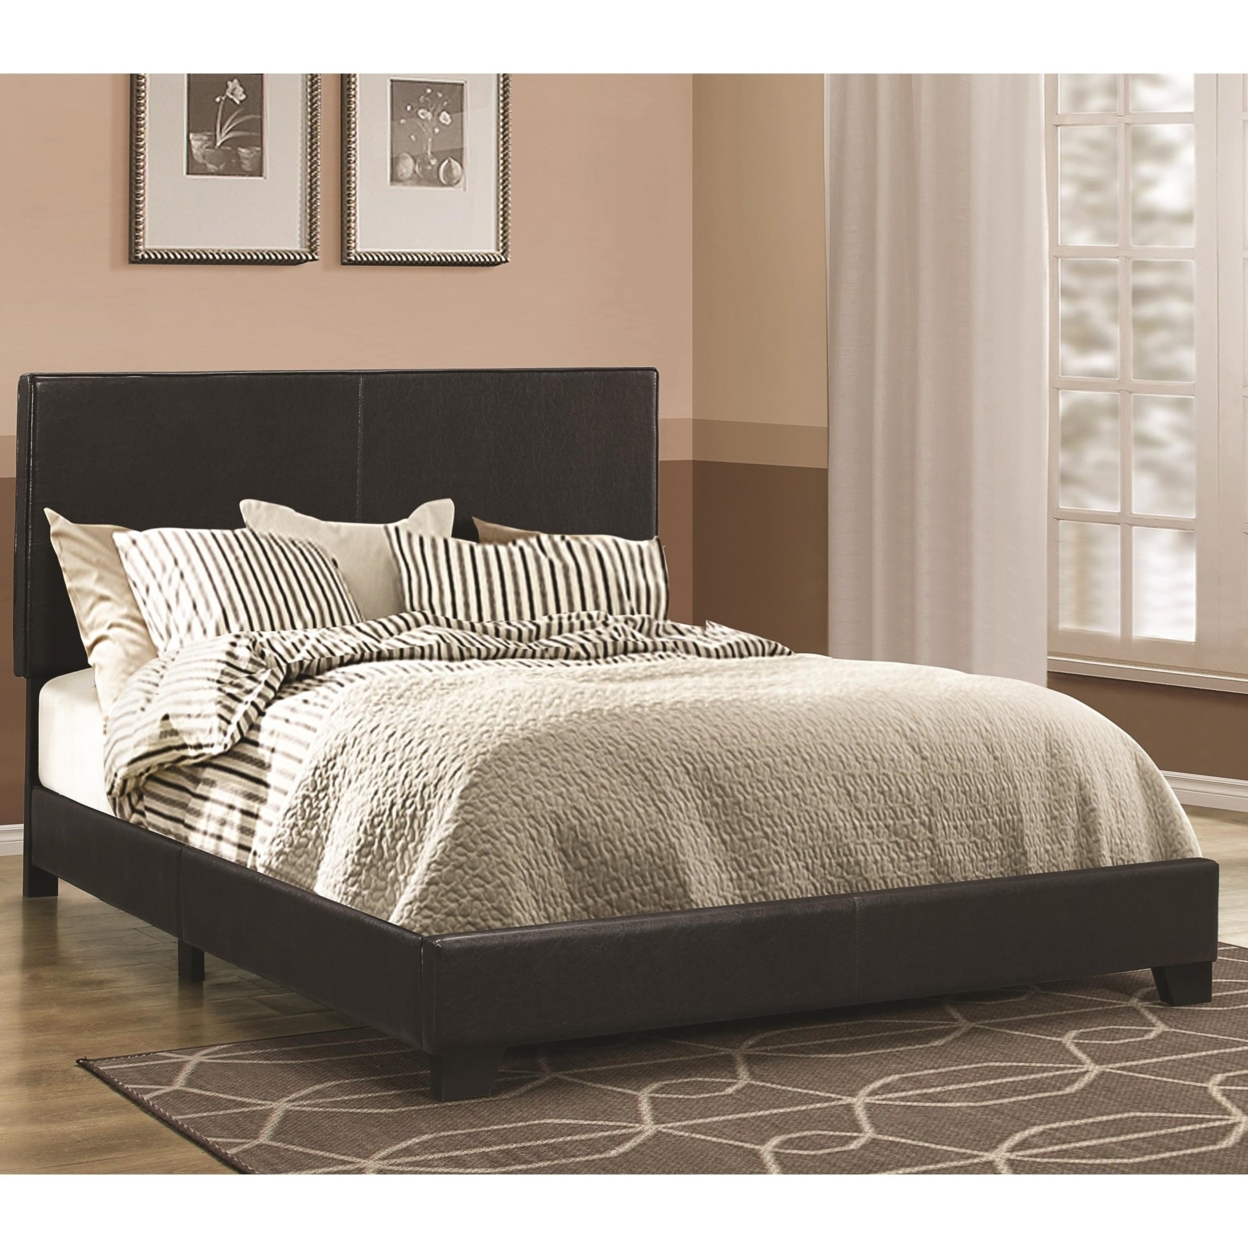 Leather Upholstered Full Size Platform Bed, Black- Saltoro Sherpi